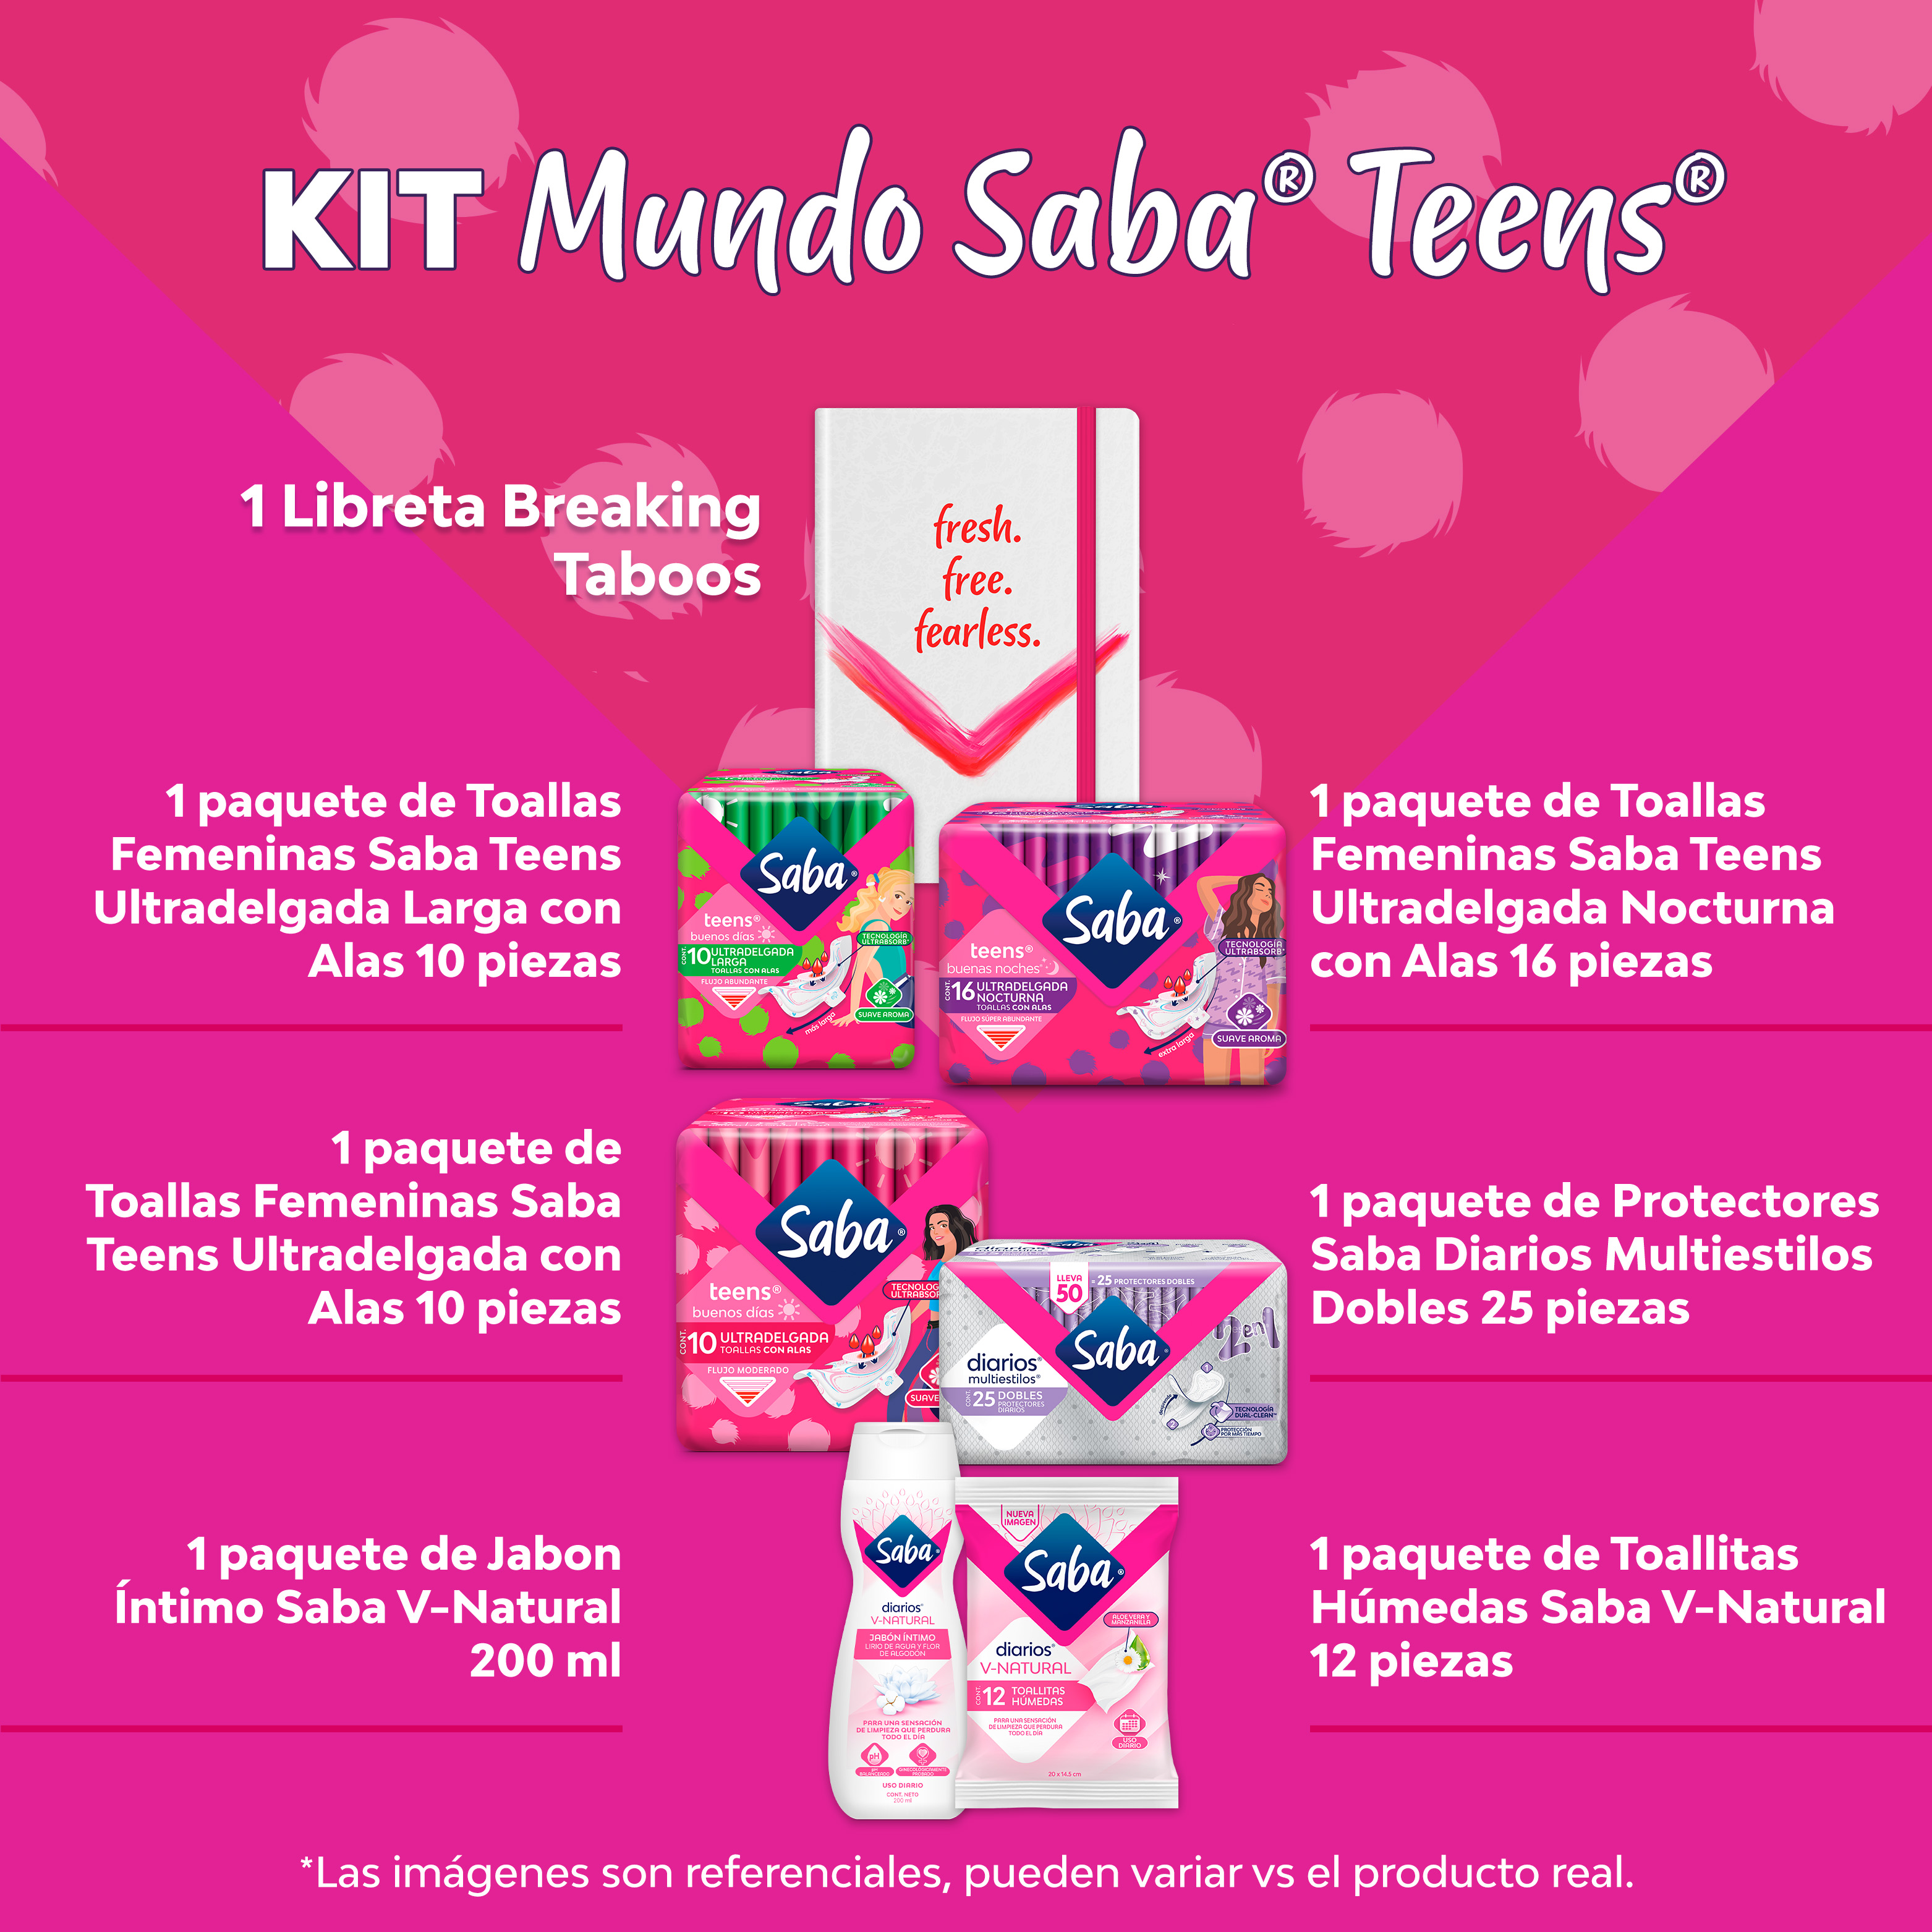 Kit Mundo Saba  ® Teens